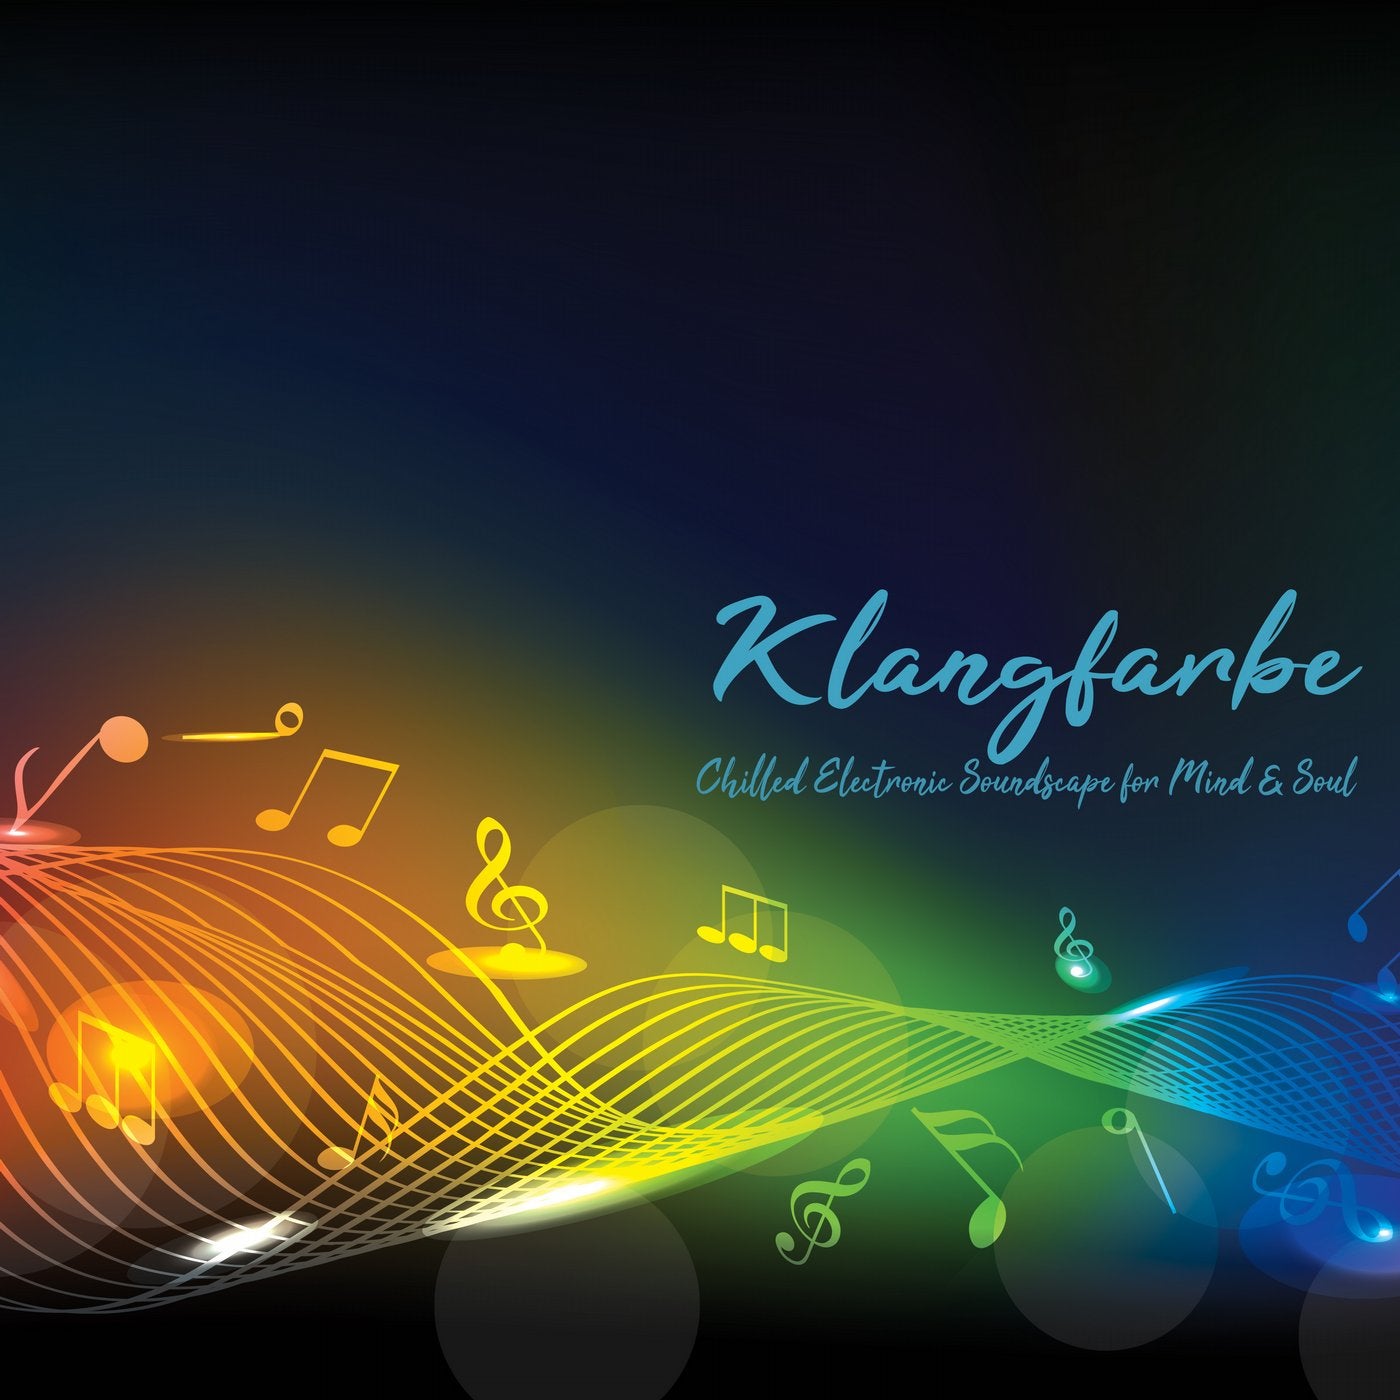 Klangfarbe: Chilled Electronic Soundscape for Mind & Soul